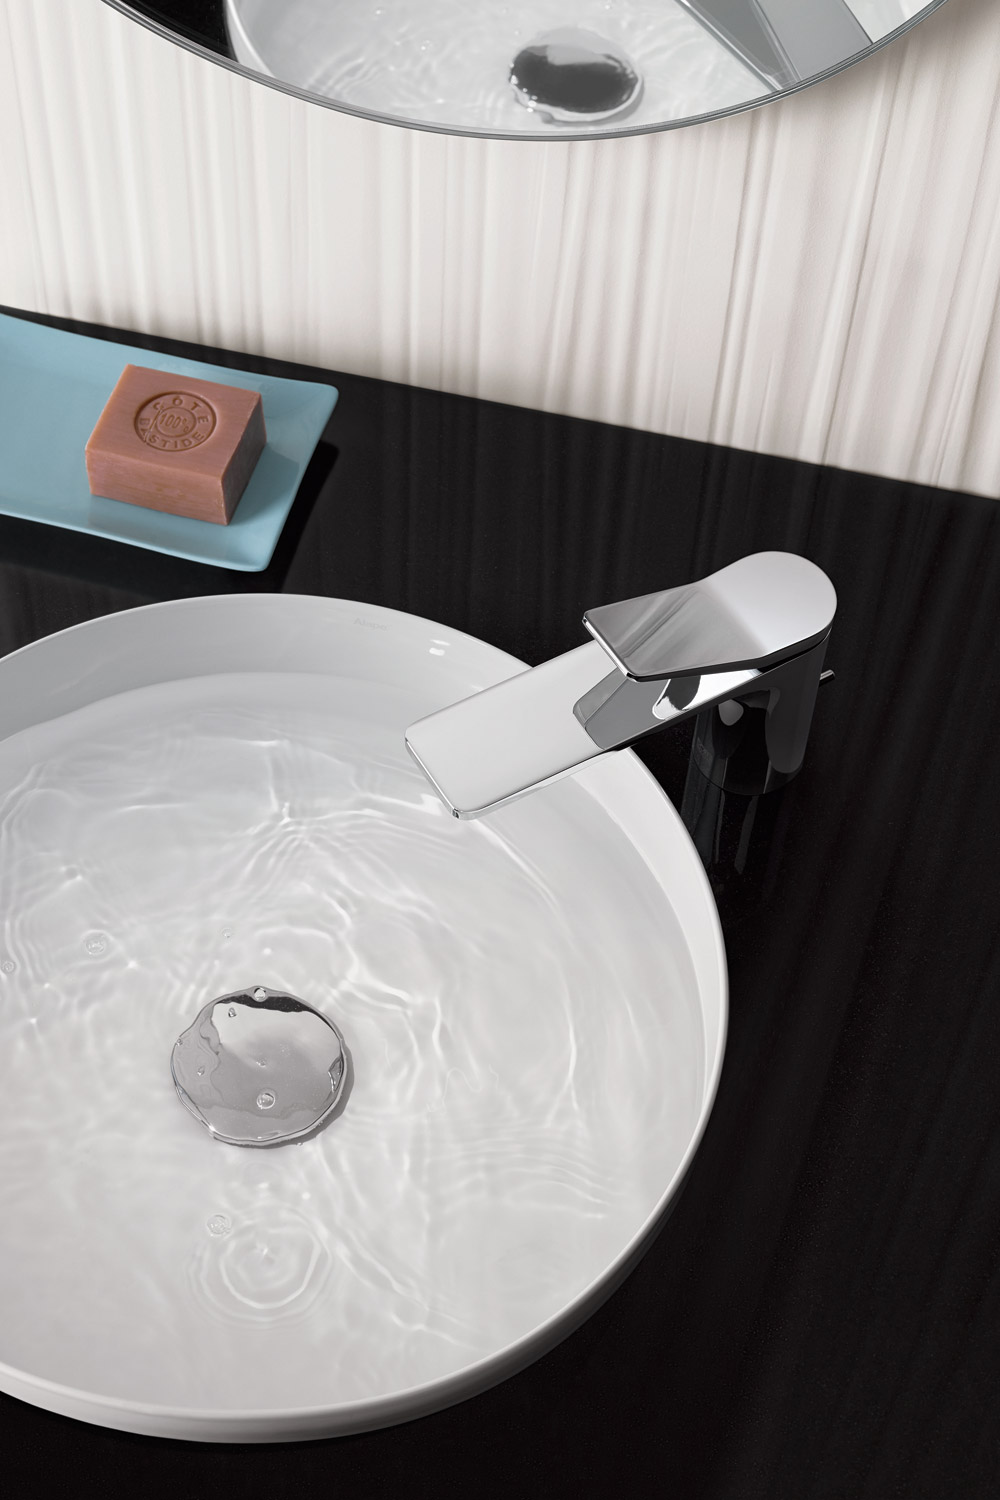 Add style to your bathroom with Dornbracht’s new Lissé fittings